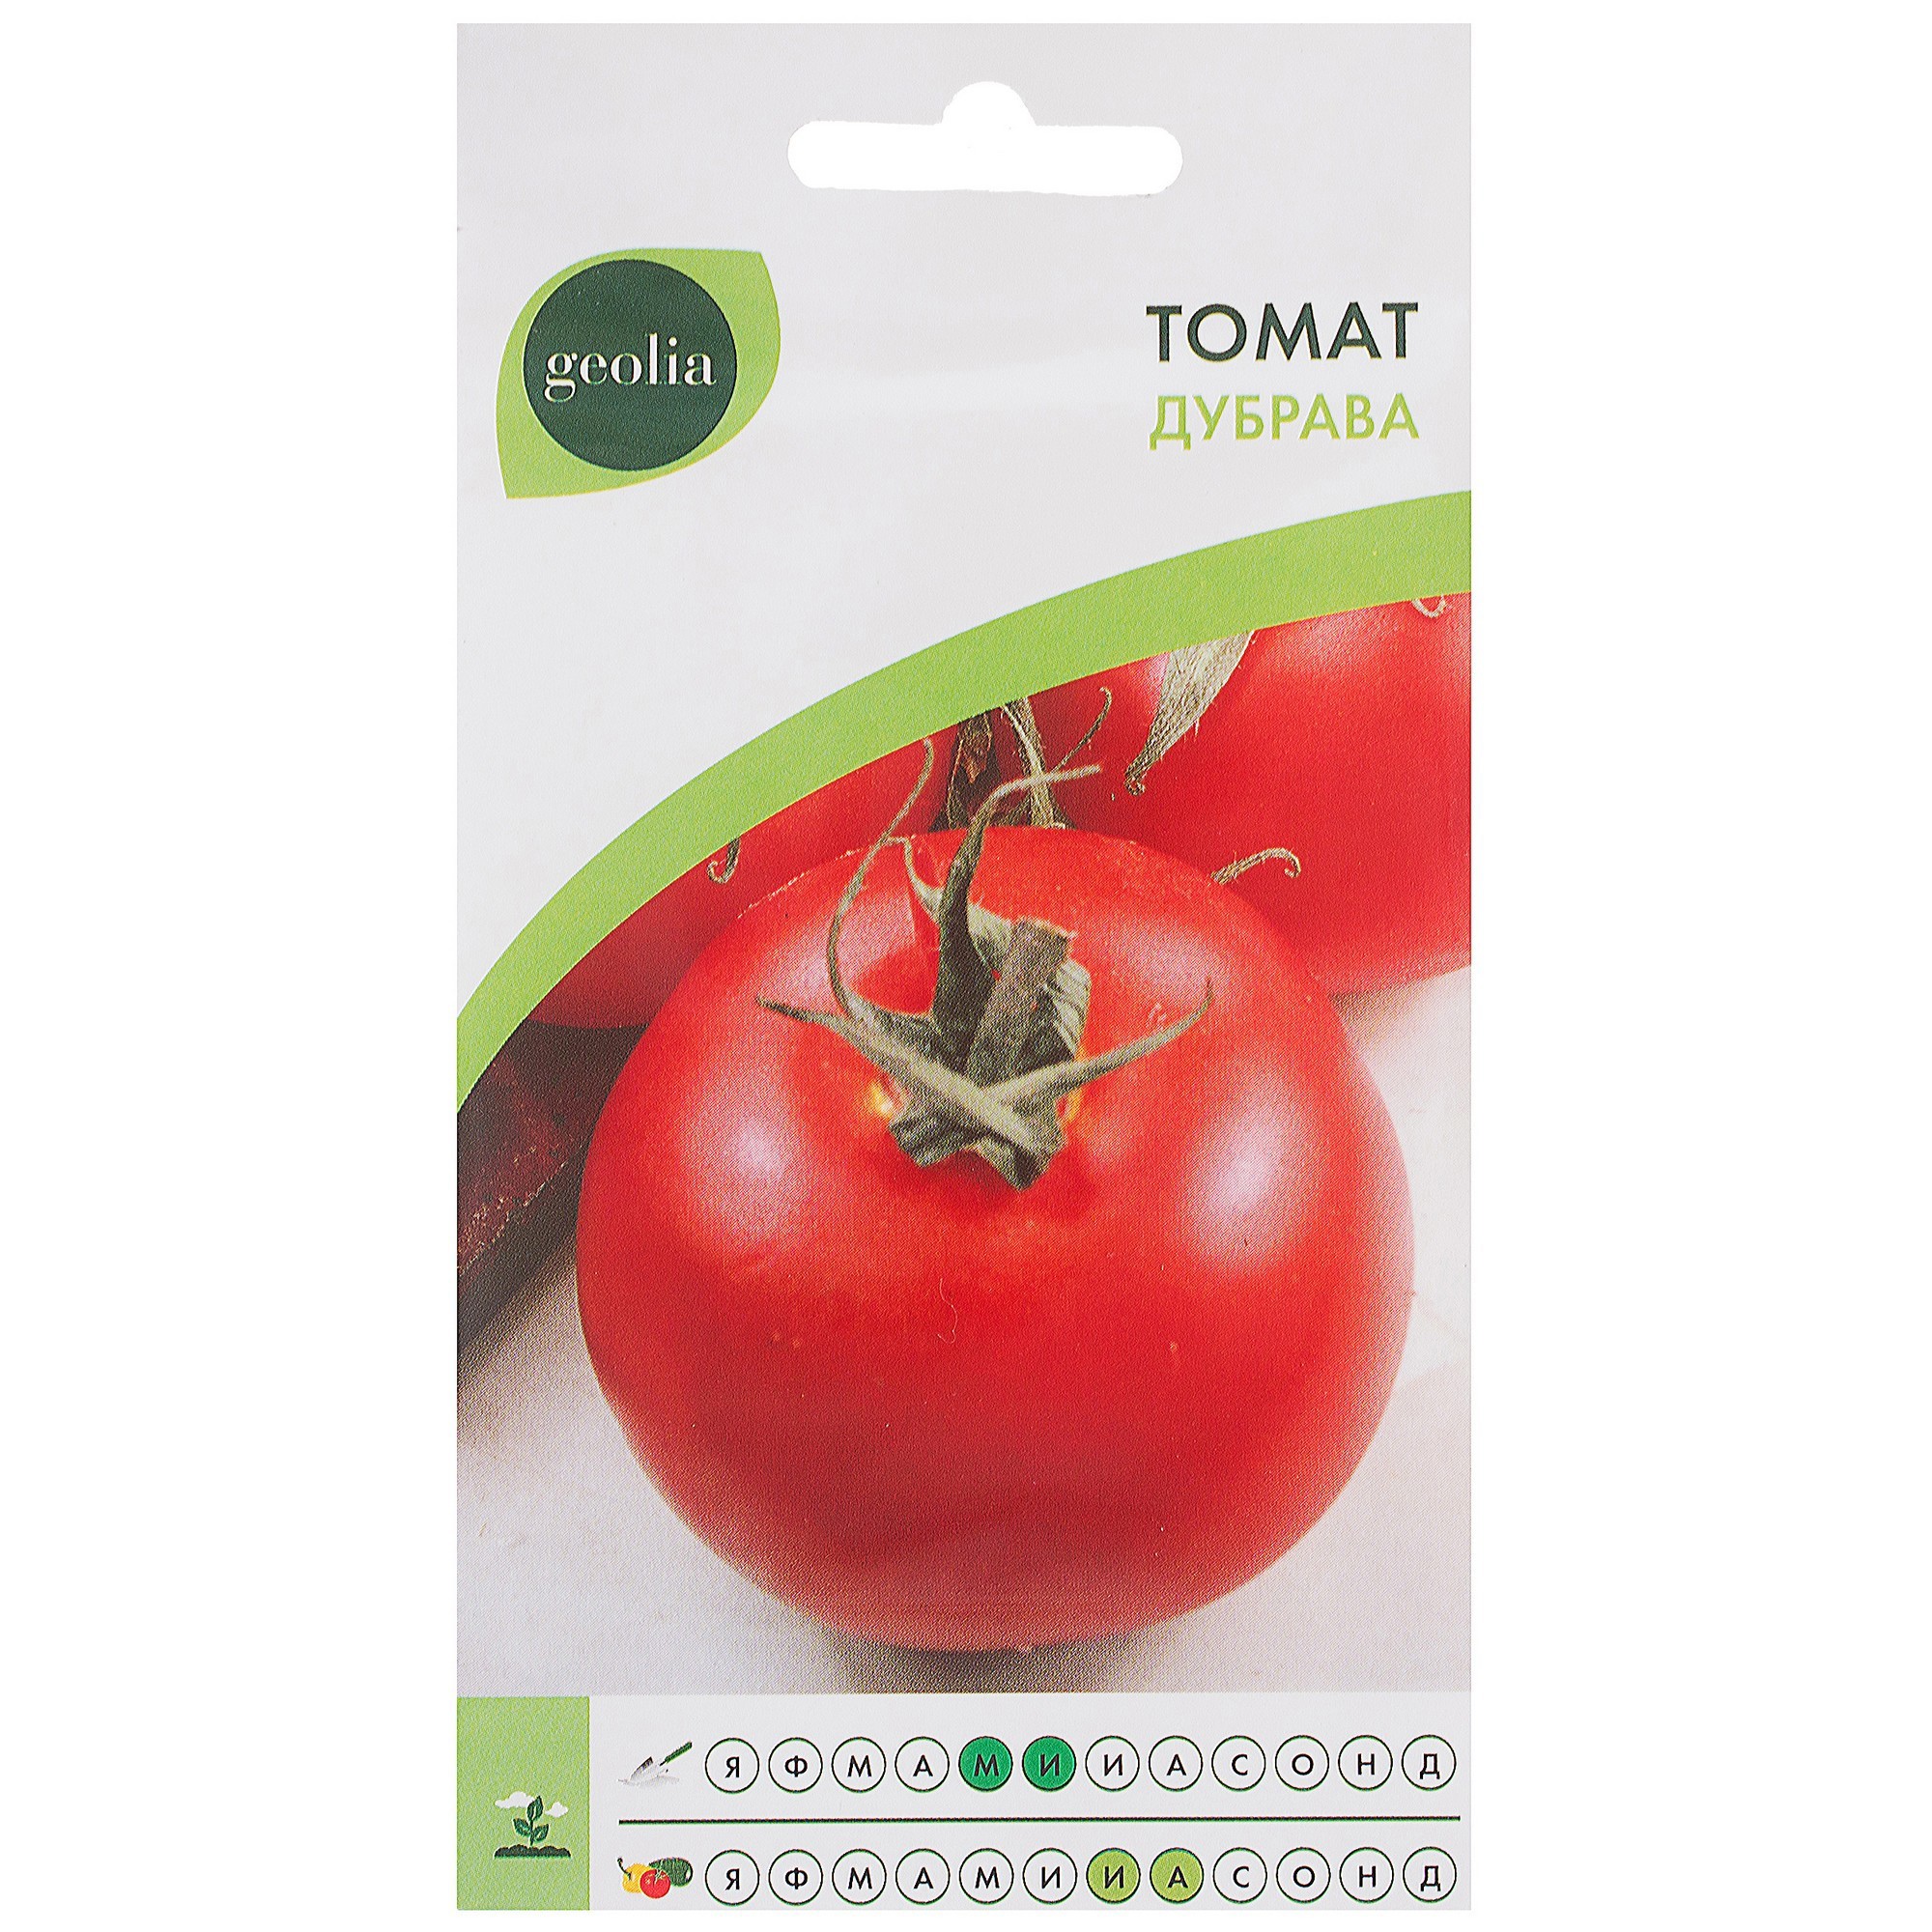 Леруа мерлен семена томатов